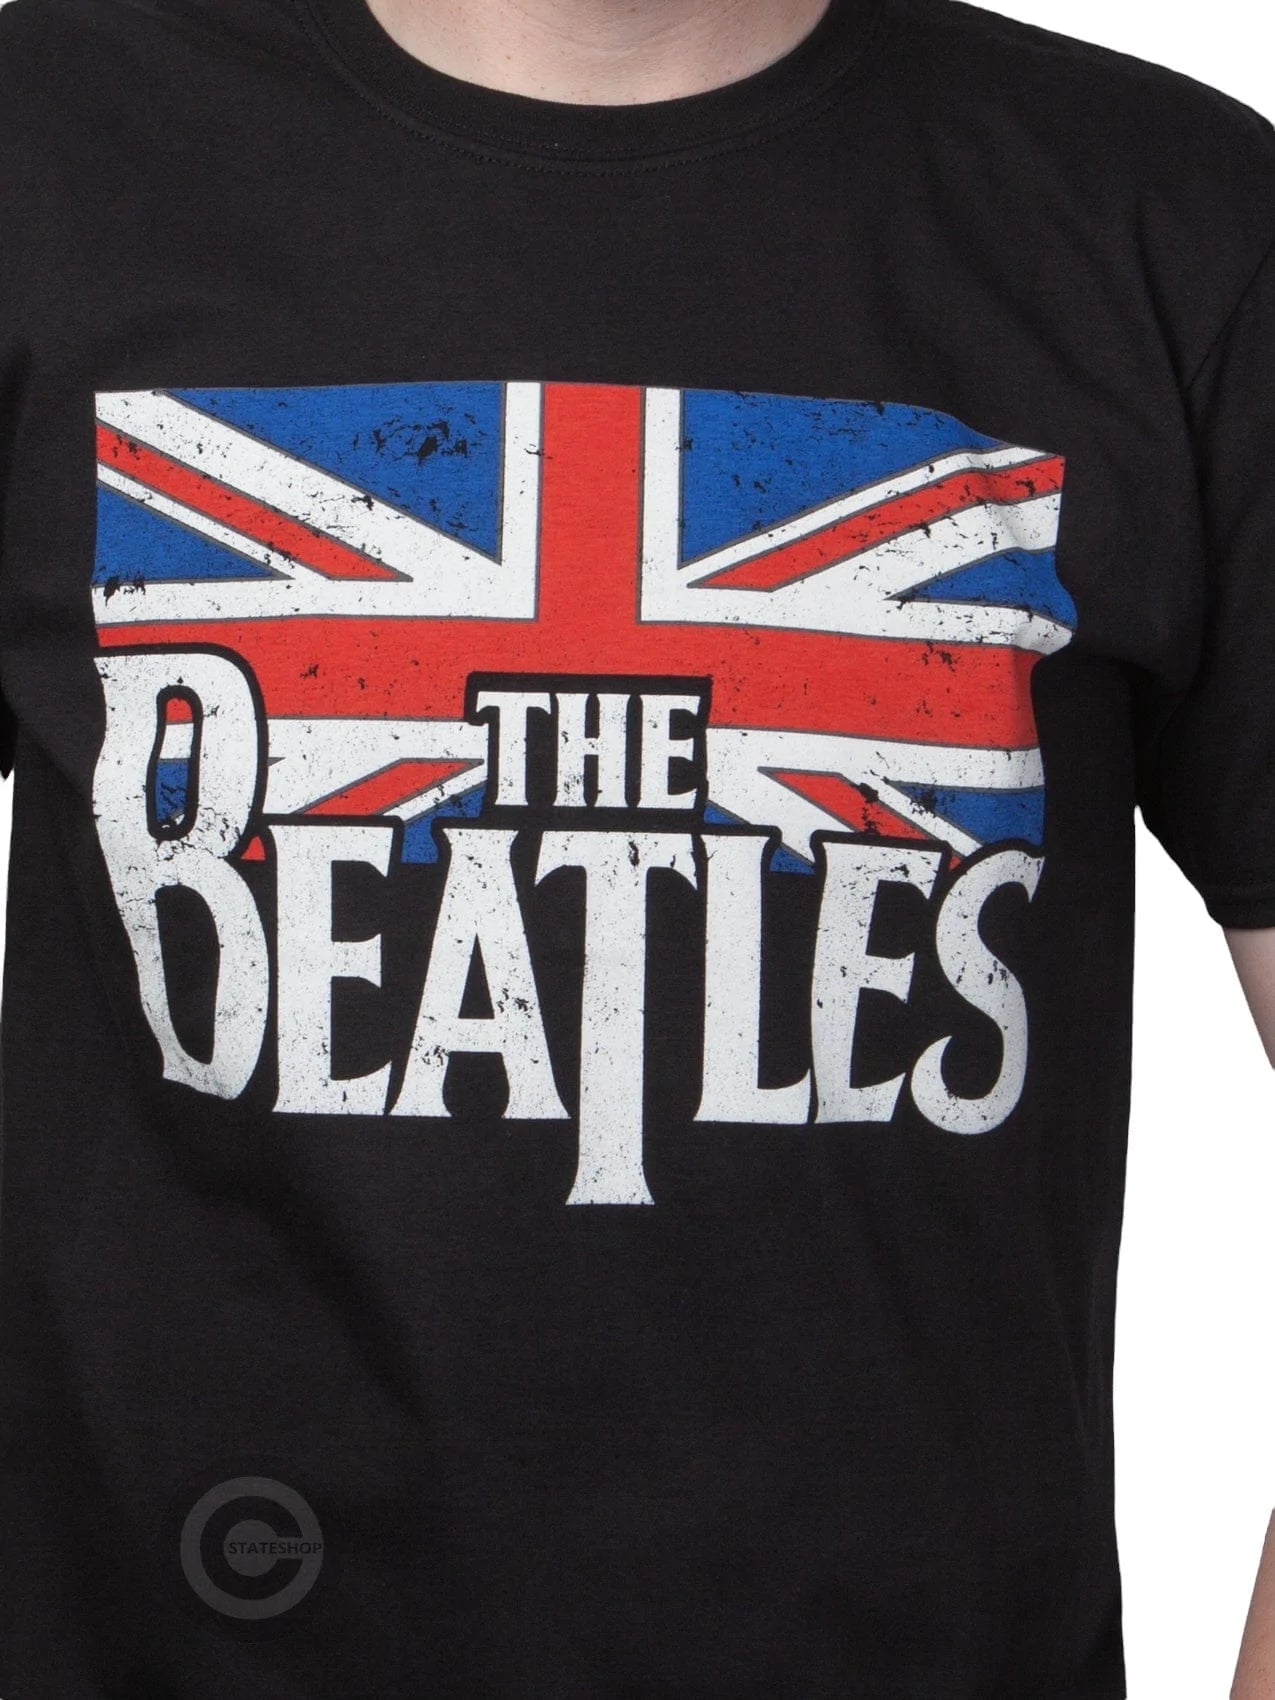 T shirt Beatles "Vintage Flag" BlackRockstarz   Stateshop Fashion